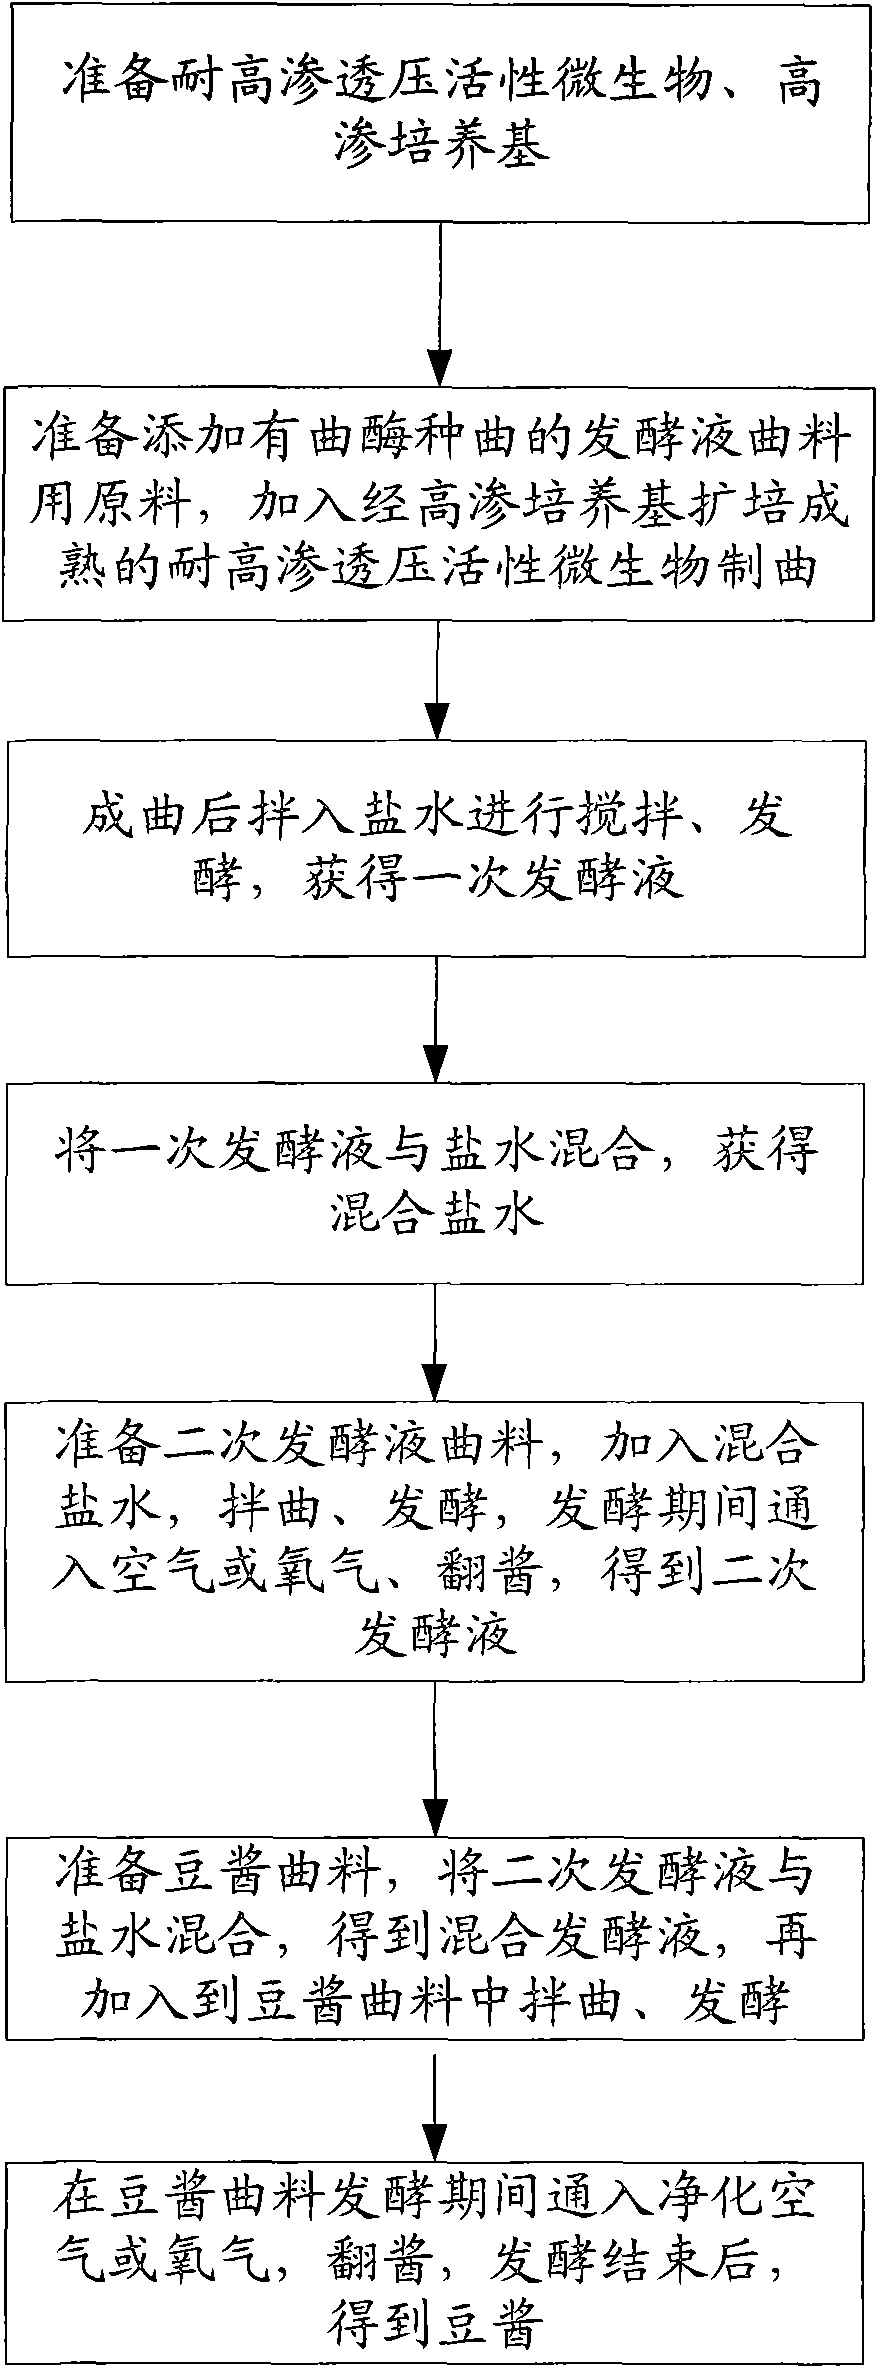 Fermentation method of soybean paste